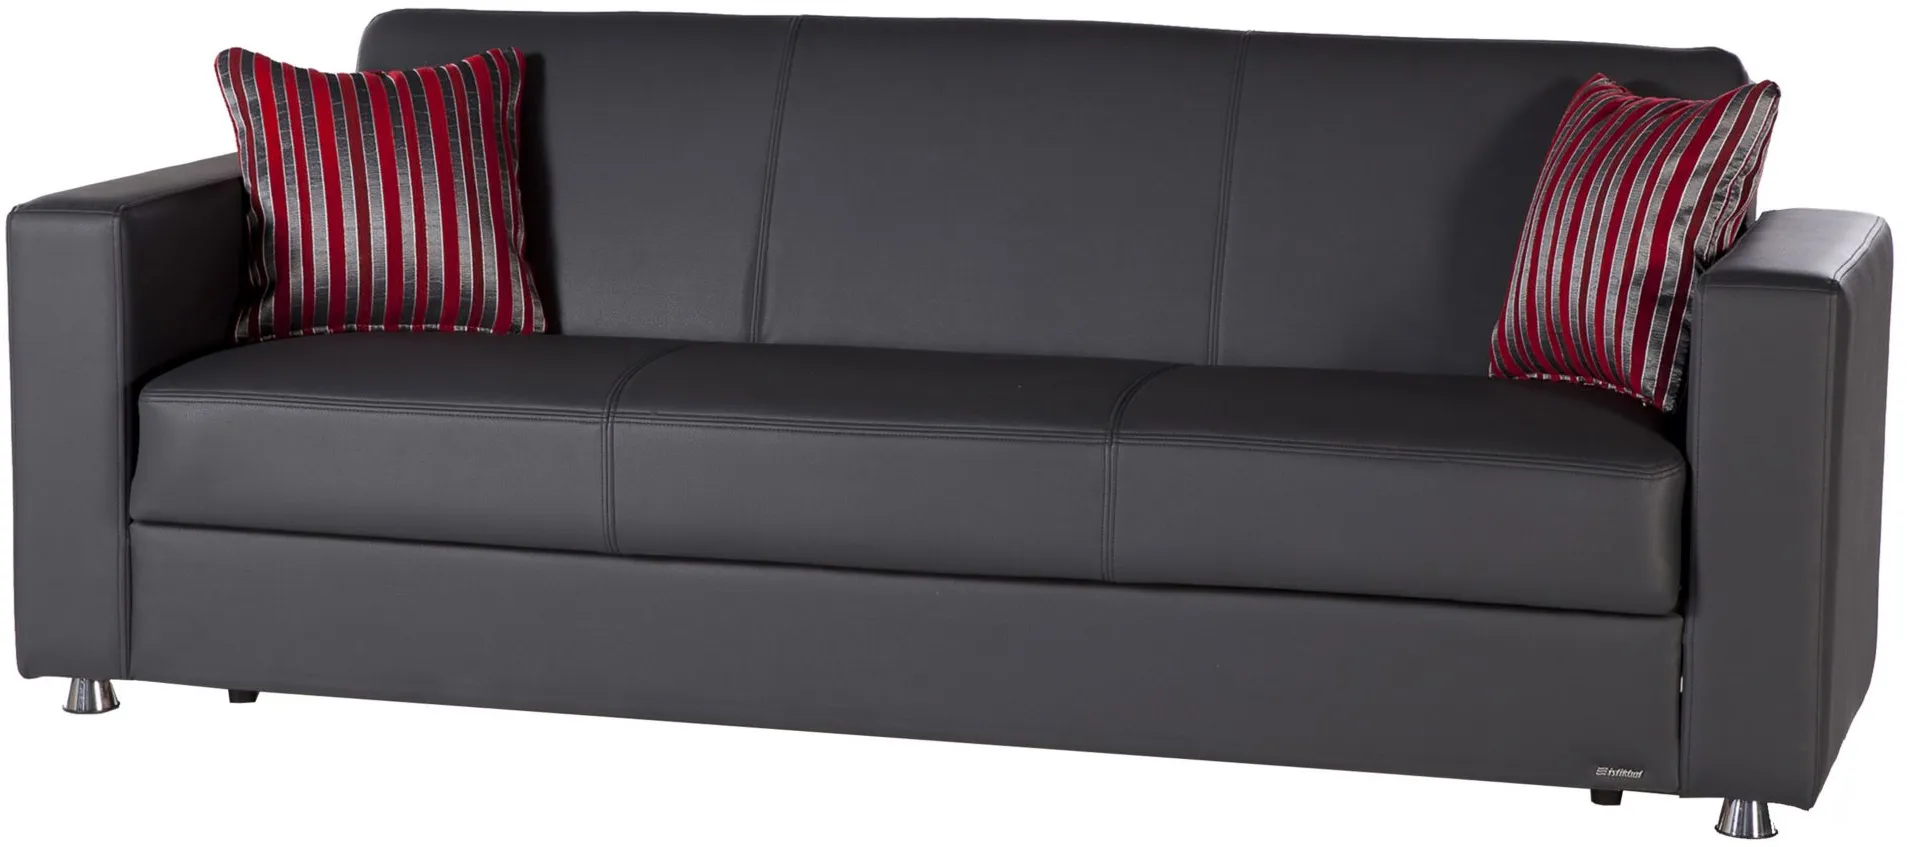 Gonzalo Sleeper Sofa in Dark Gray by HUDSON GLOBAL MARKETING USA